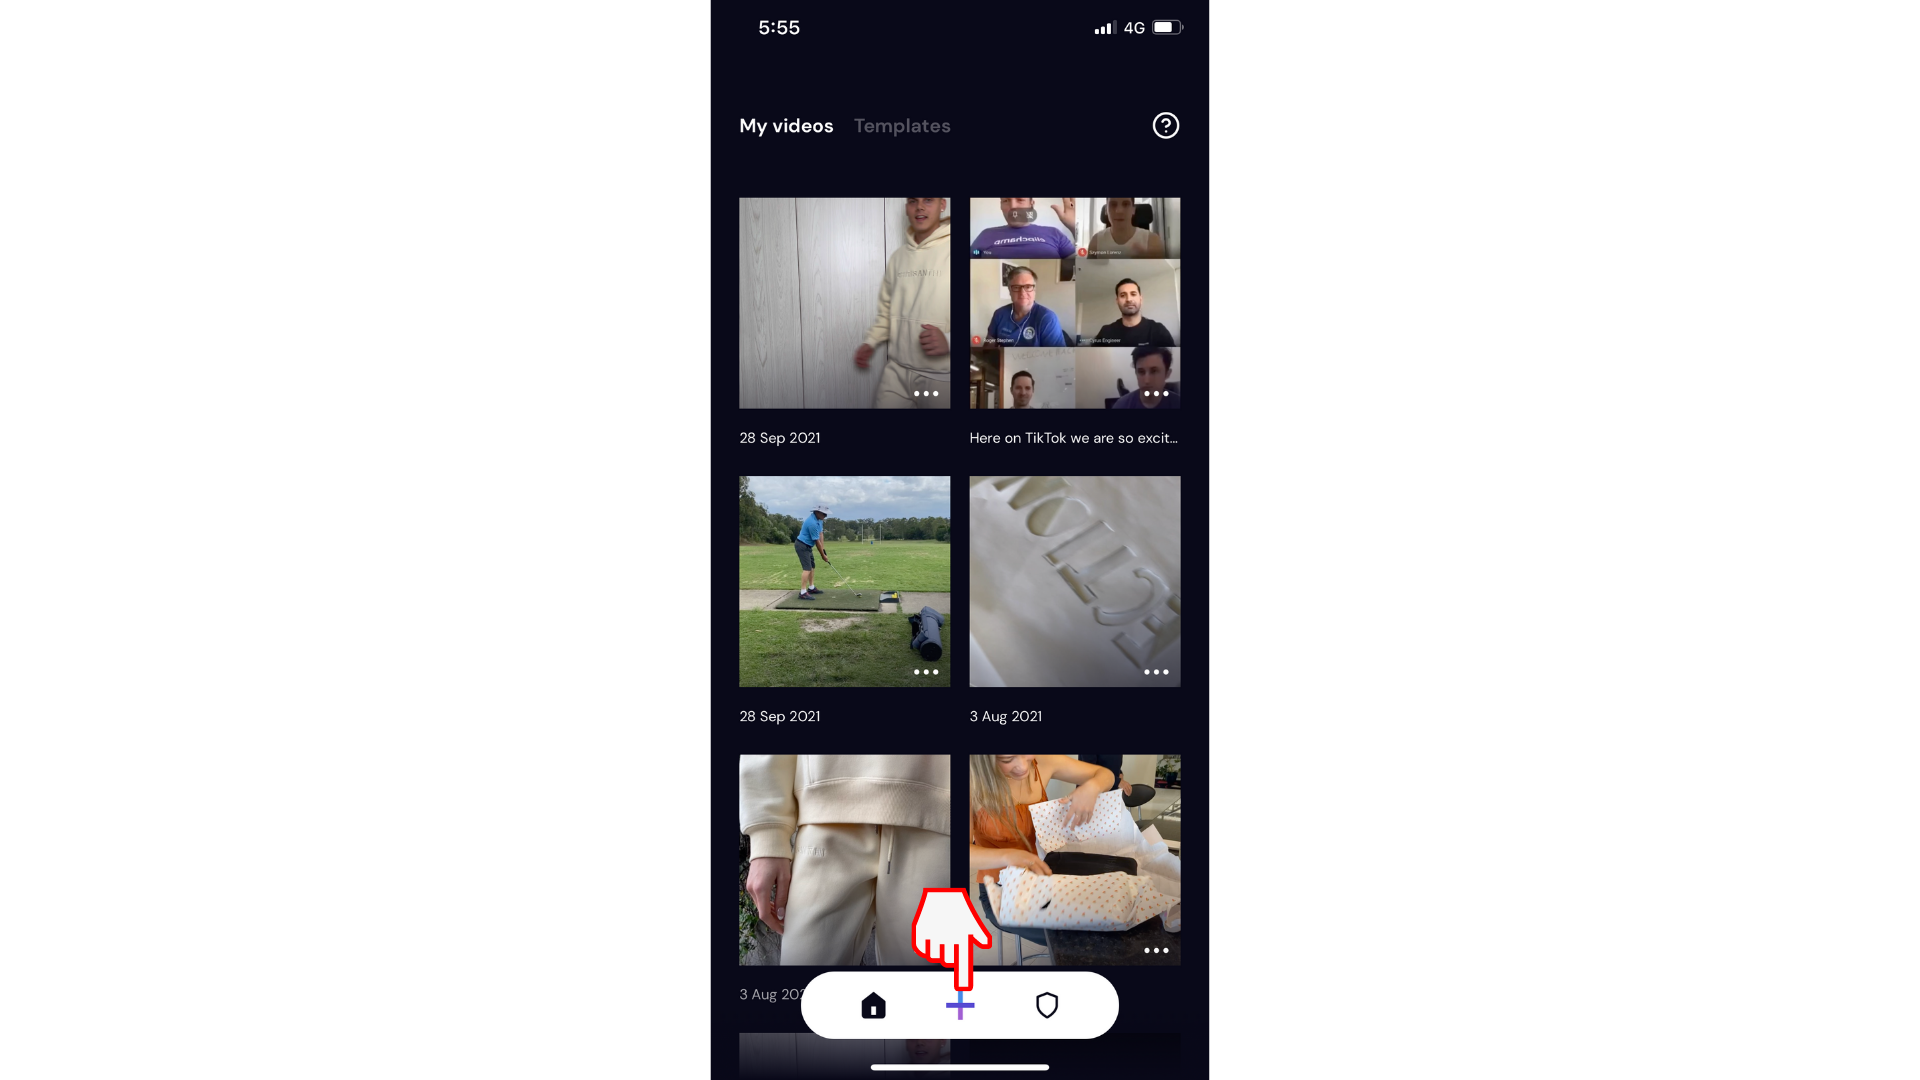 Pengguna membuat video baru di aplikasi seluler